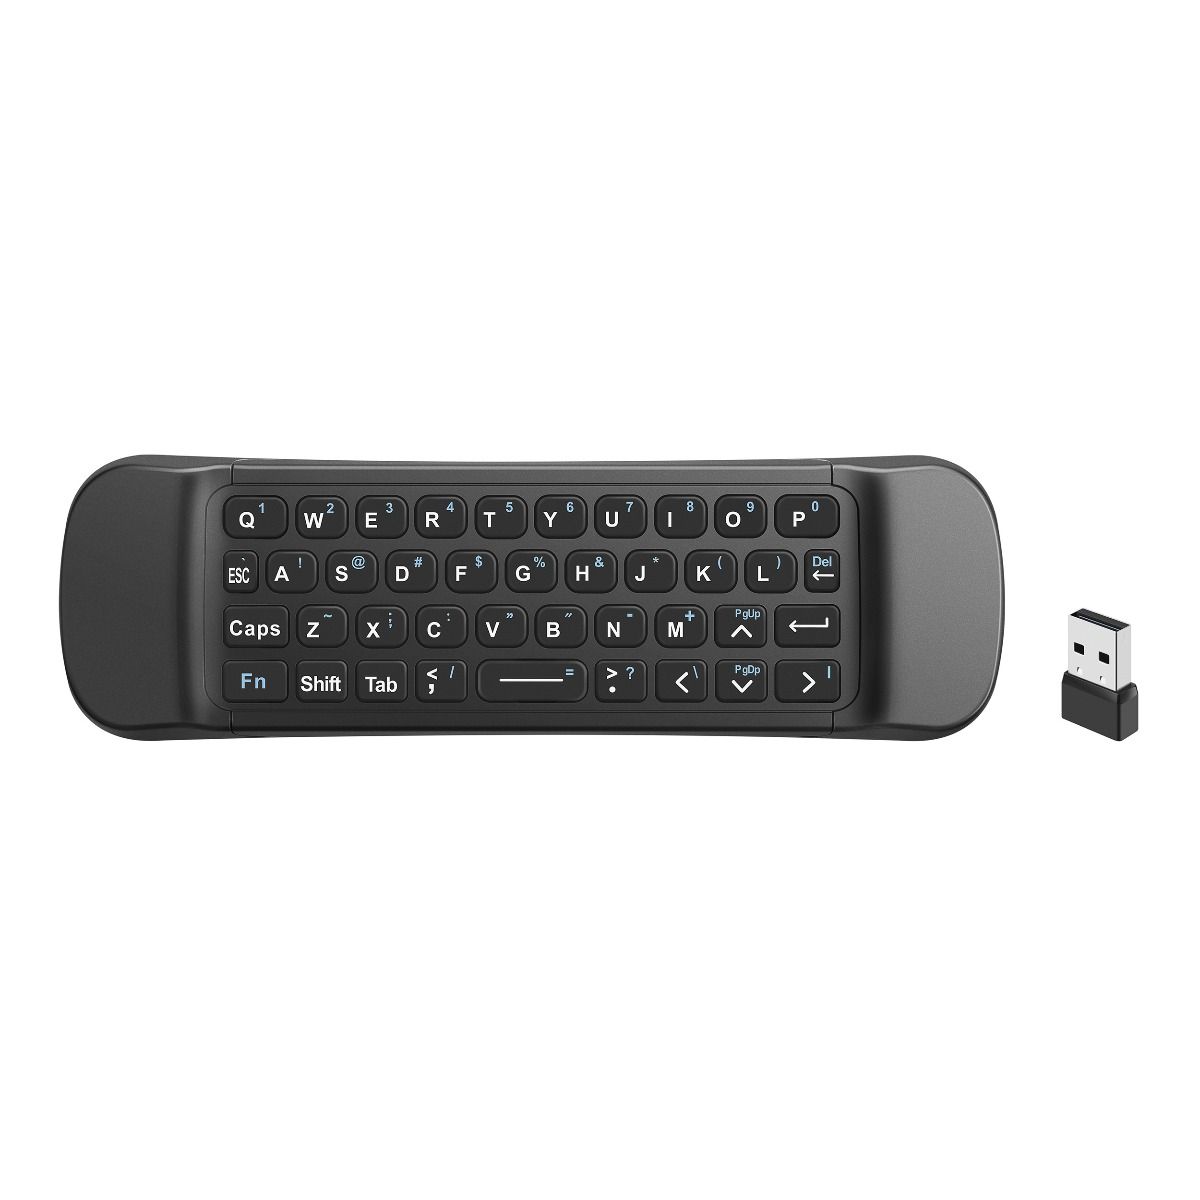 Mando a distancia TV universal Superior con teclado keyboard para Smart-tv